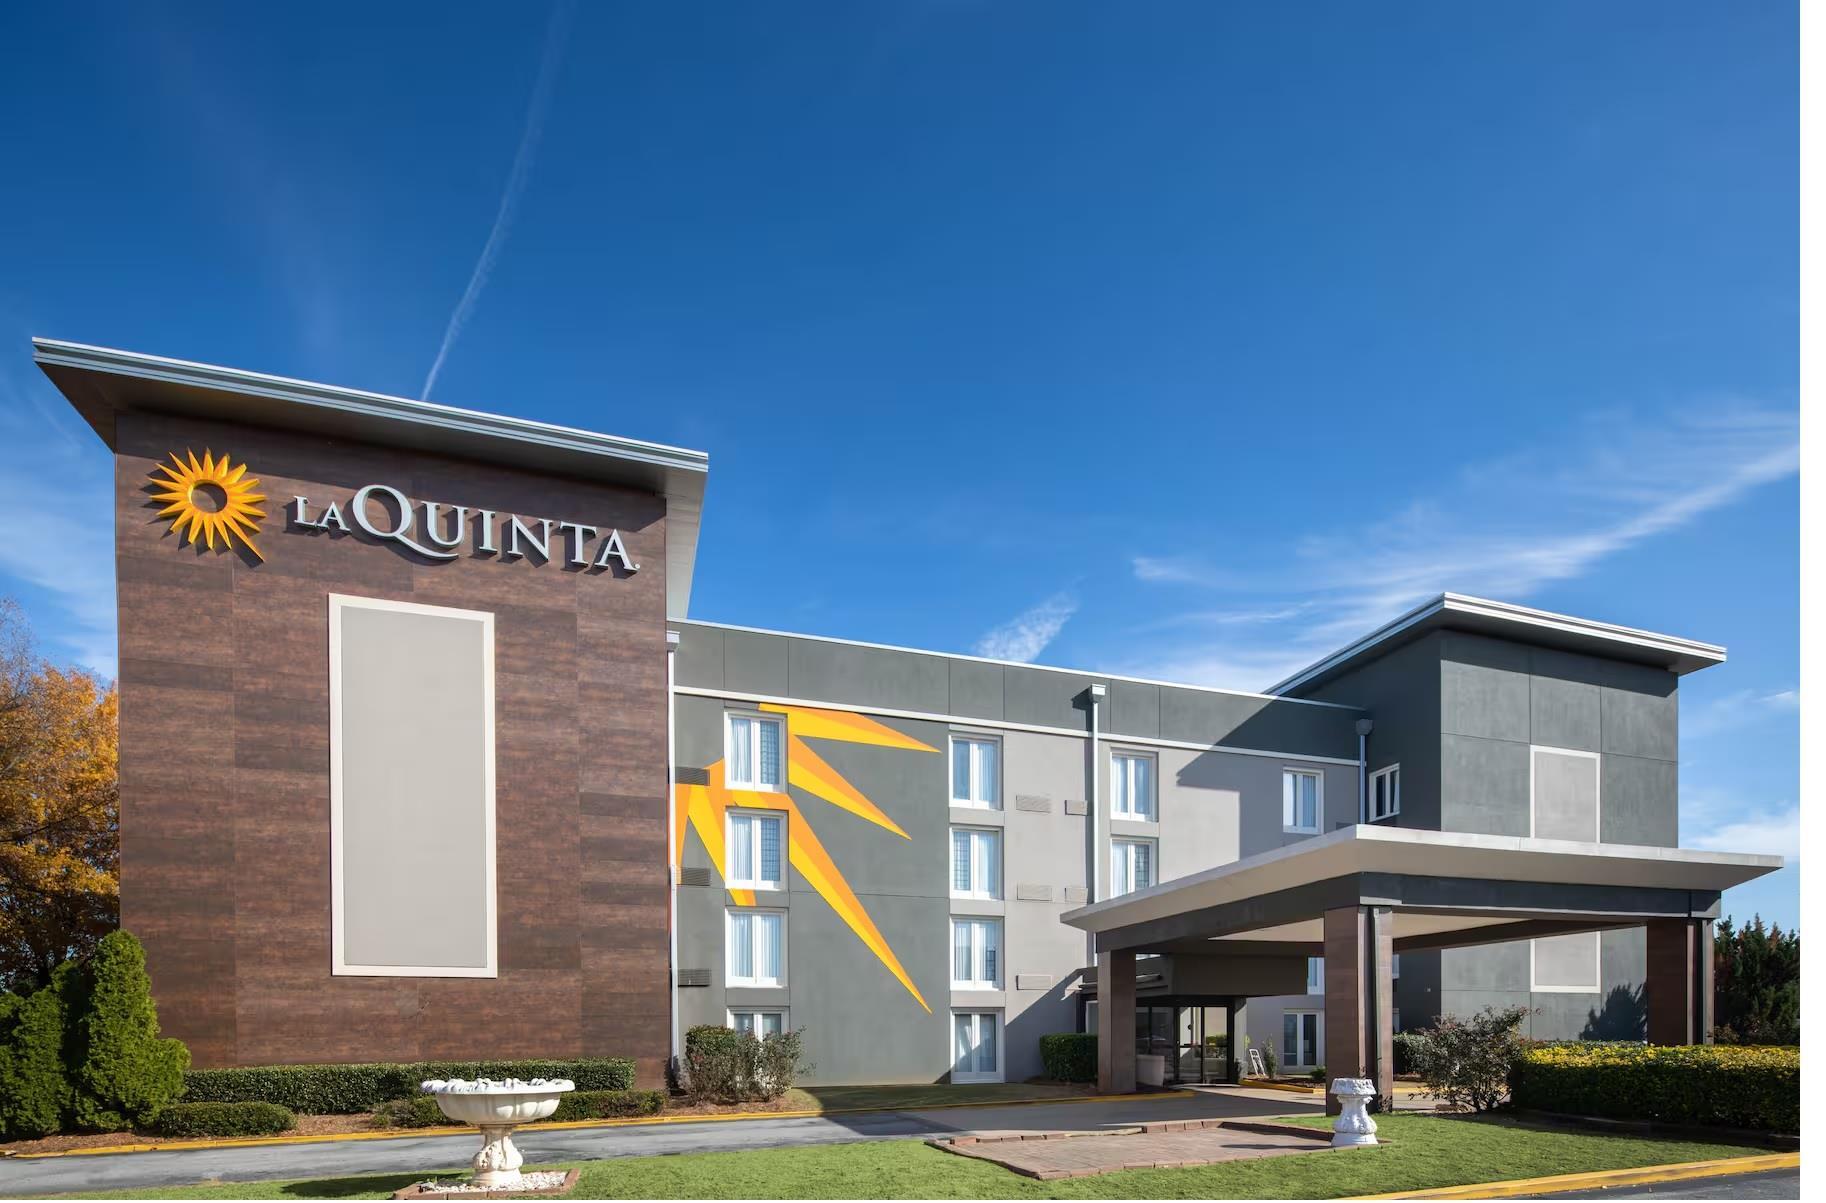 La Quinta Inn & Suites by Wyndham Atlanta Airport South in College Park, GA